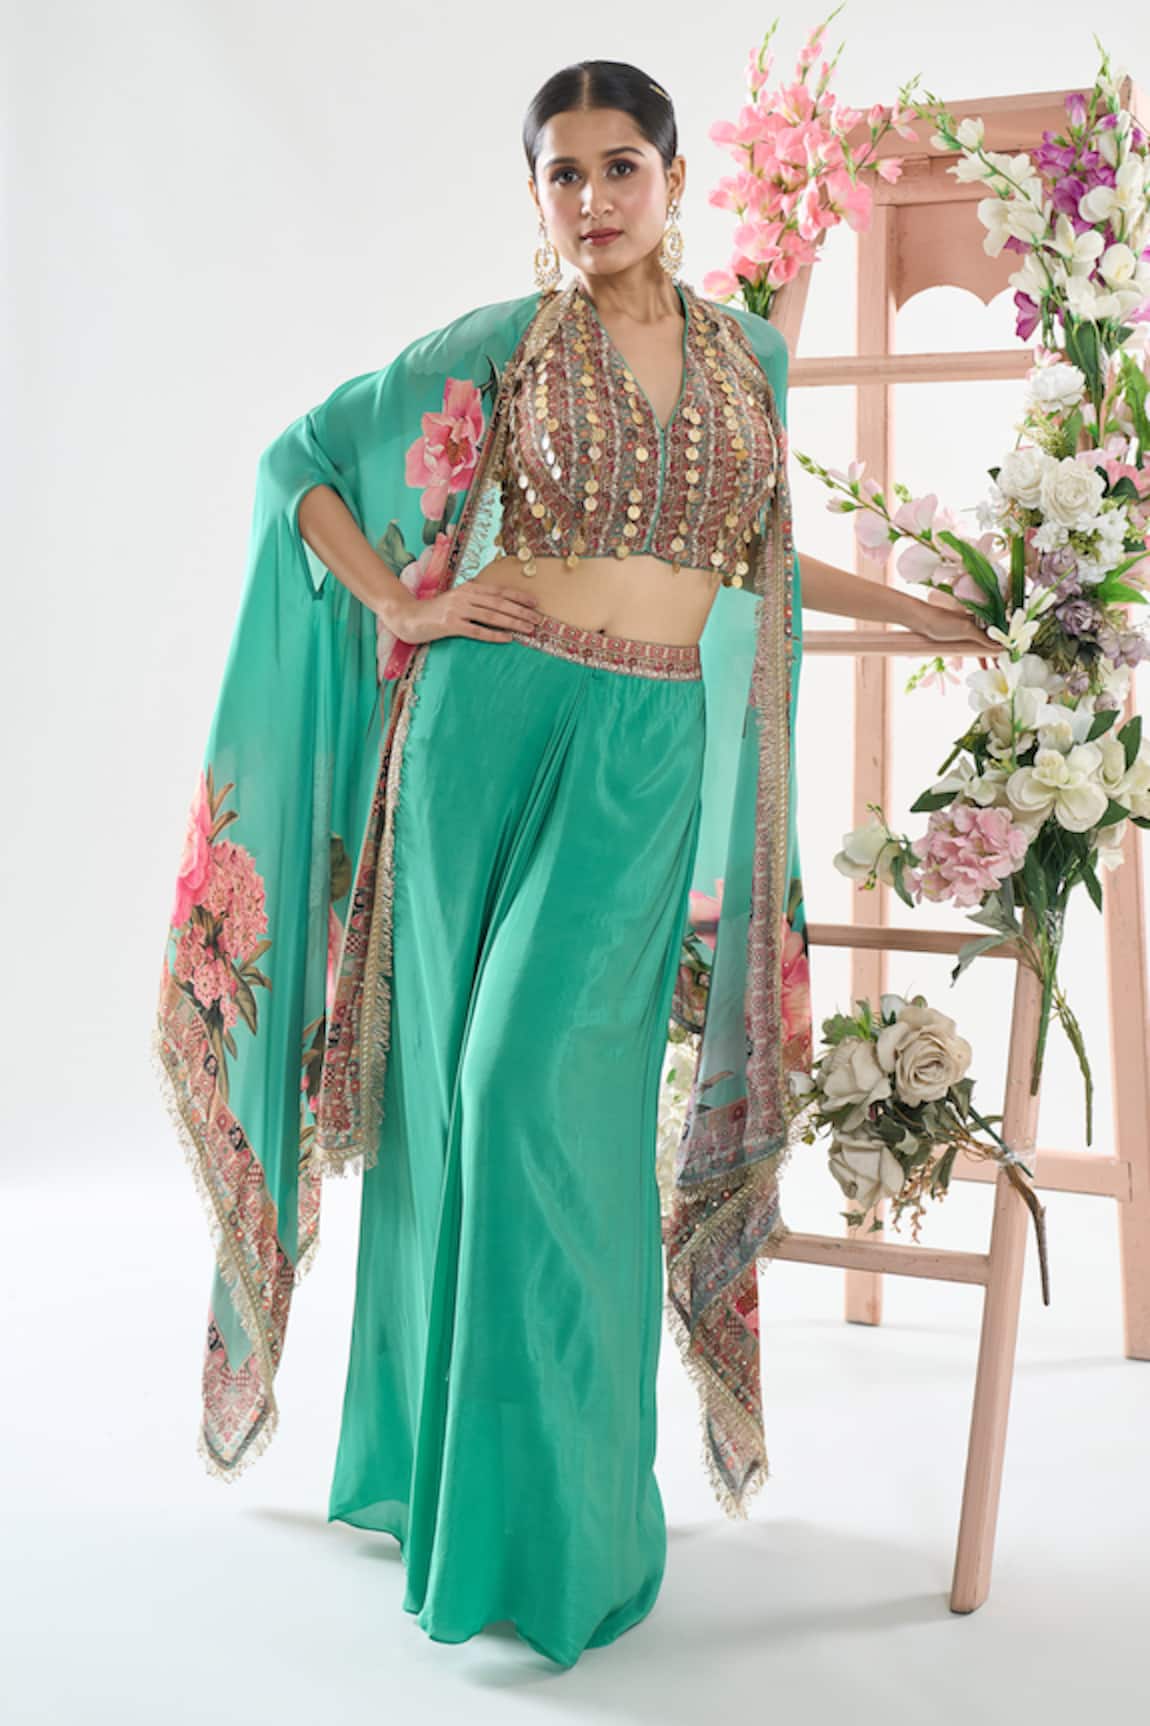 Basanti - Kapde Aur Koffee x AZA Floral Print Cape & Draped Skirt Set